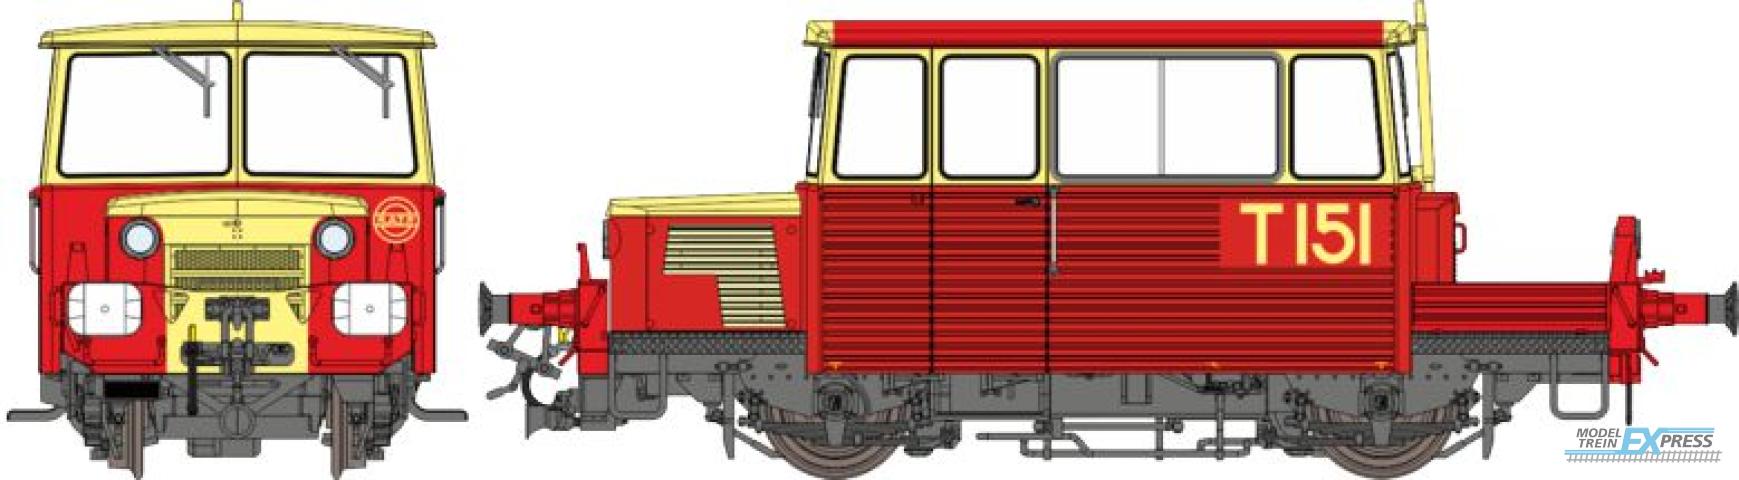 REE models MB-111 DU65  T 151 of RATP, red roof, Era III-IV - ANALOG DC